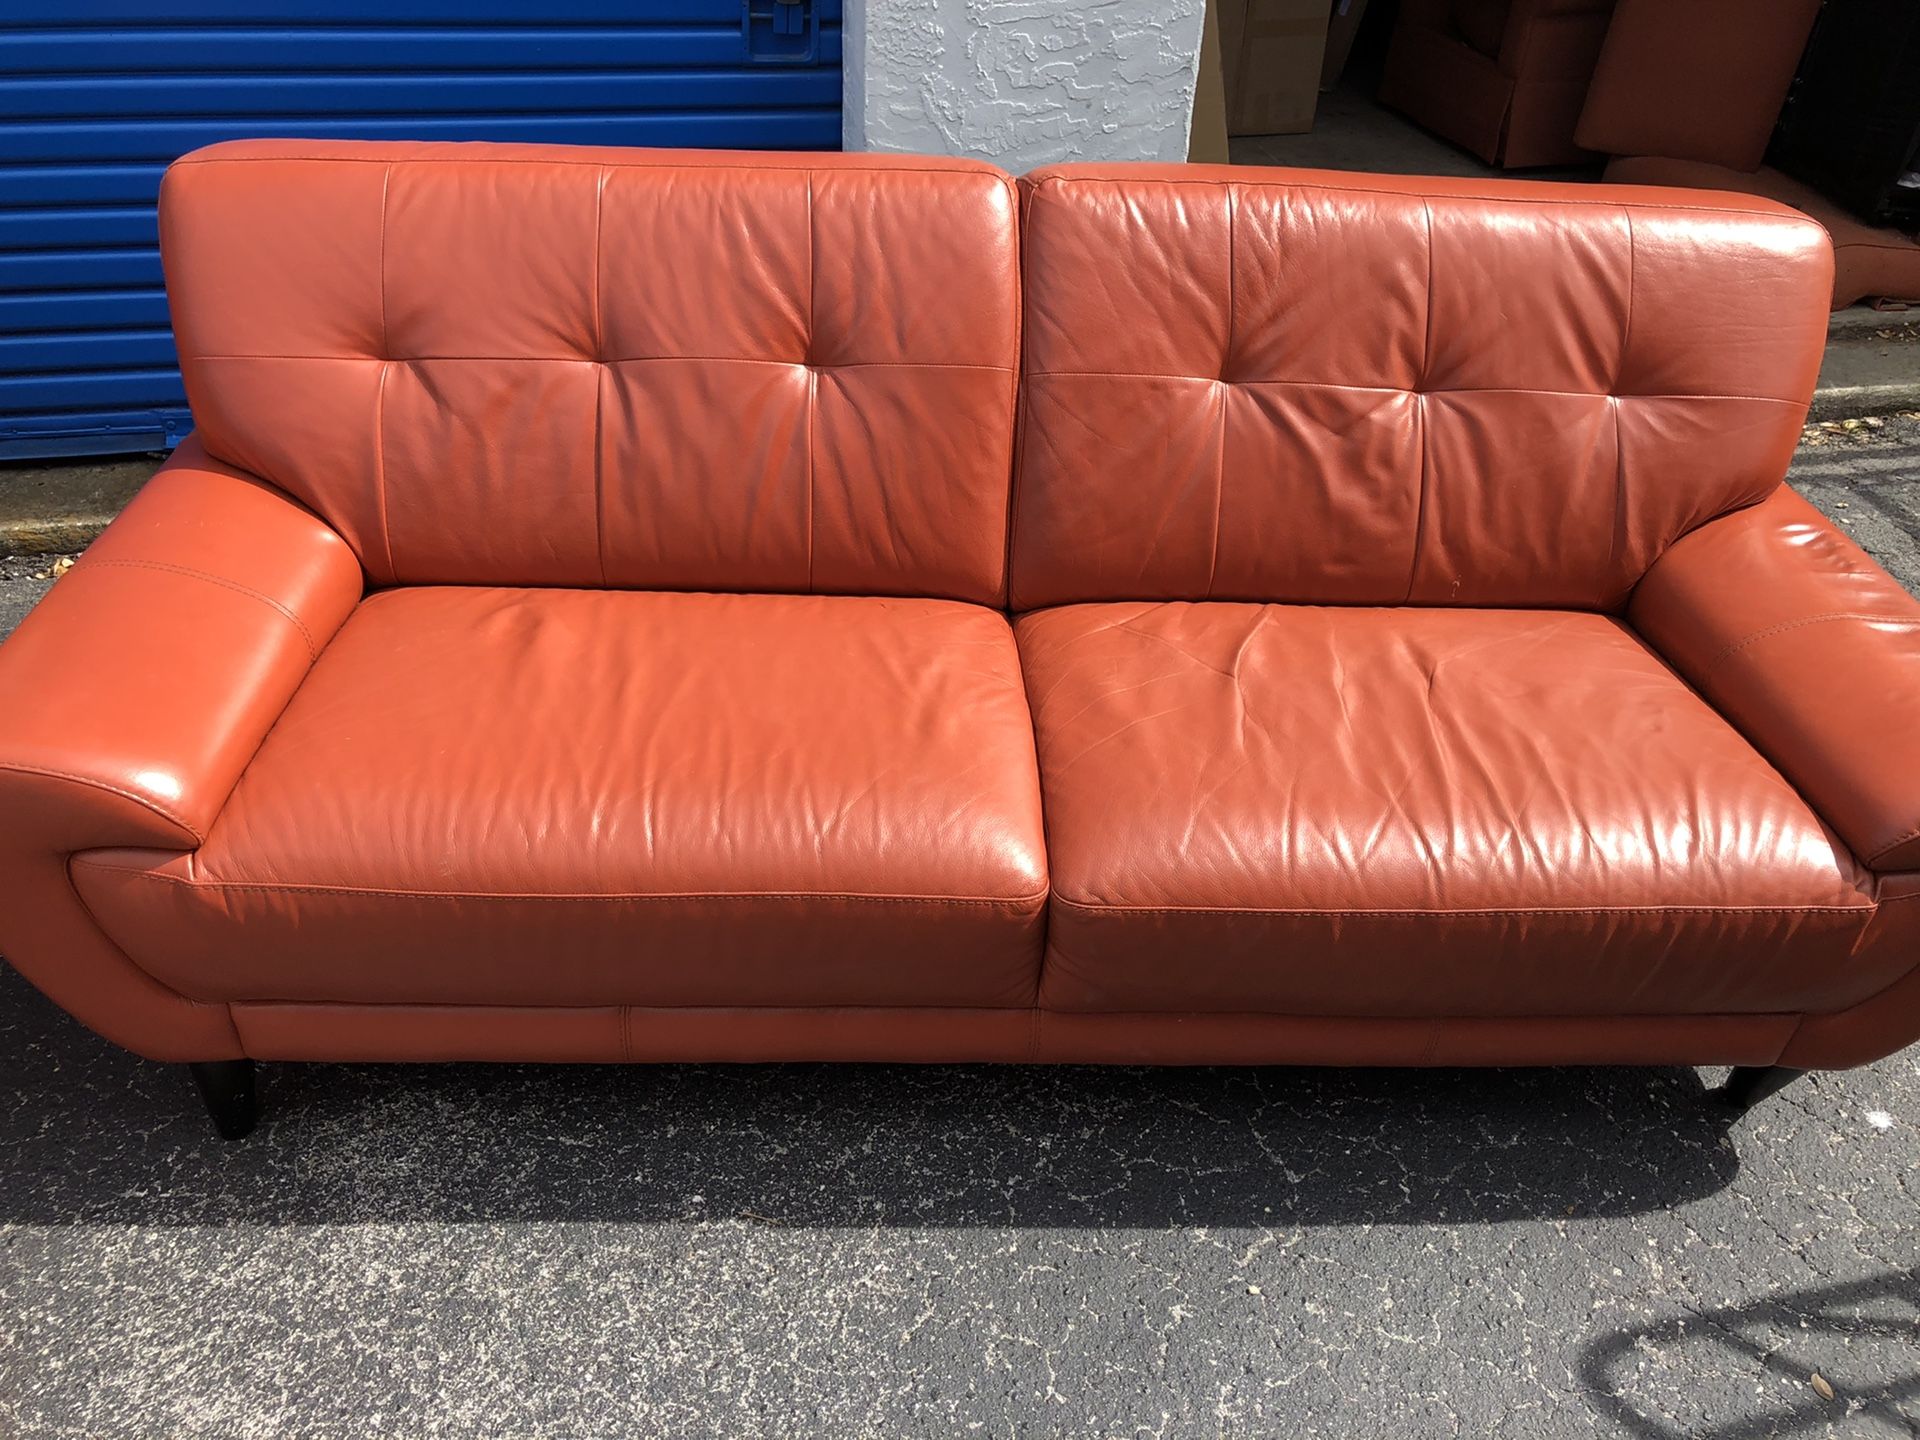 Leather living room furniture